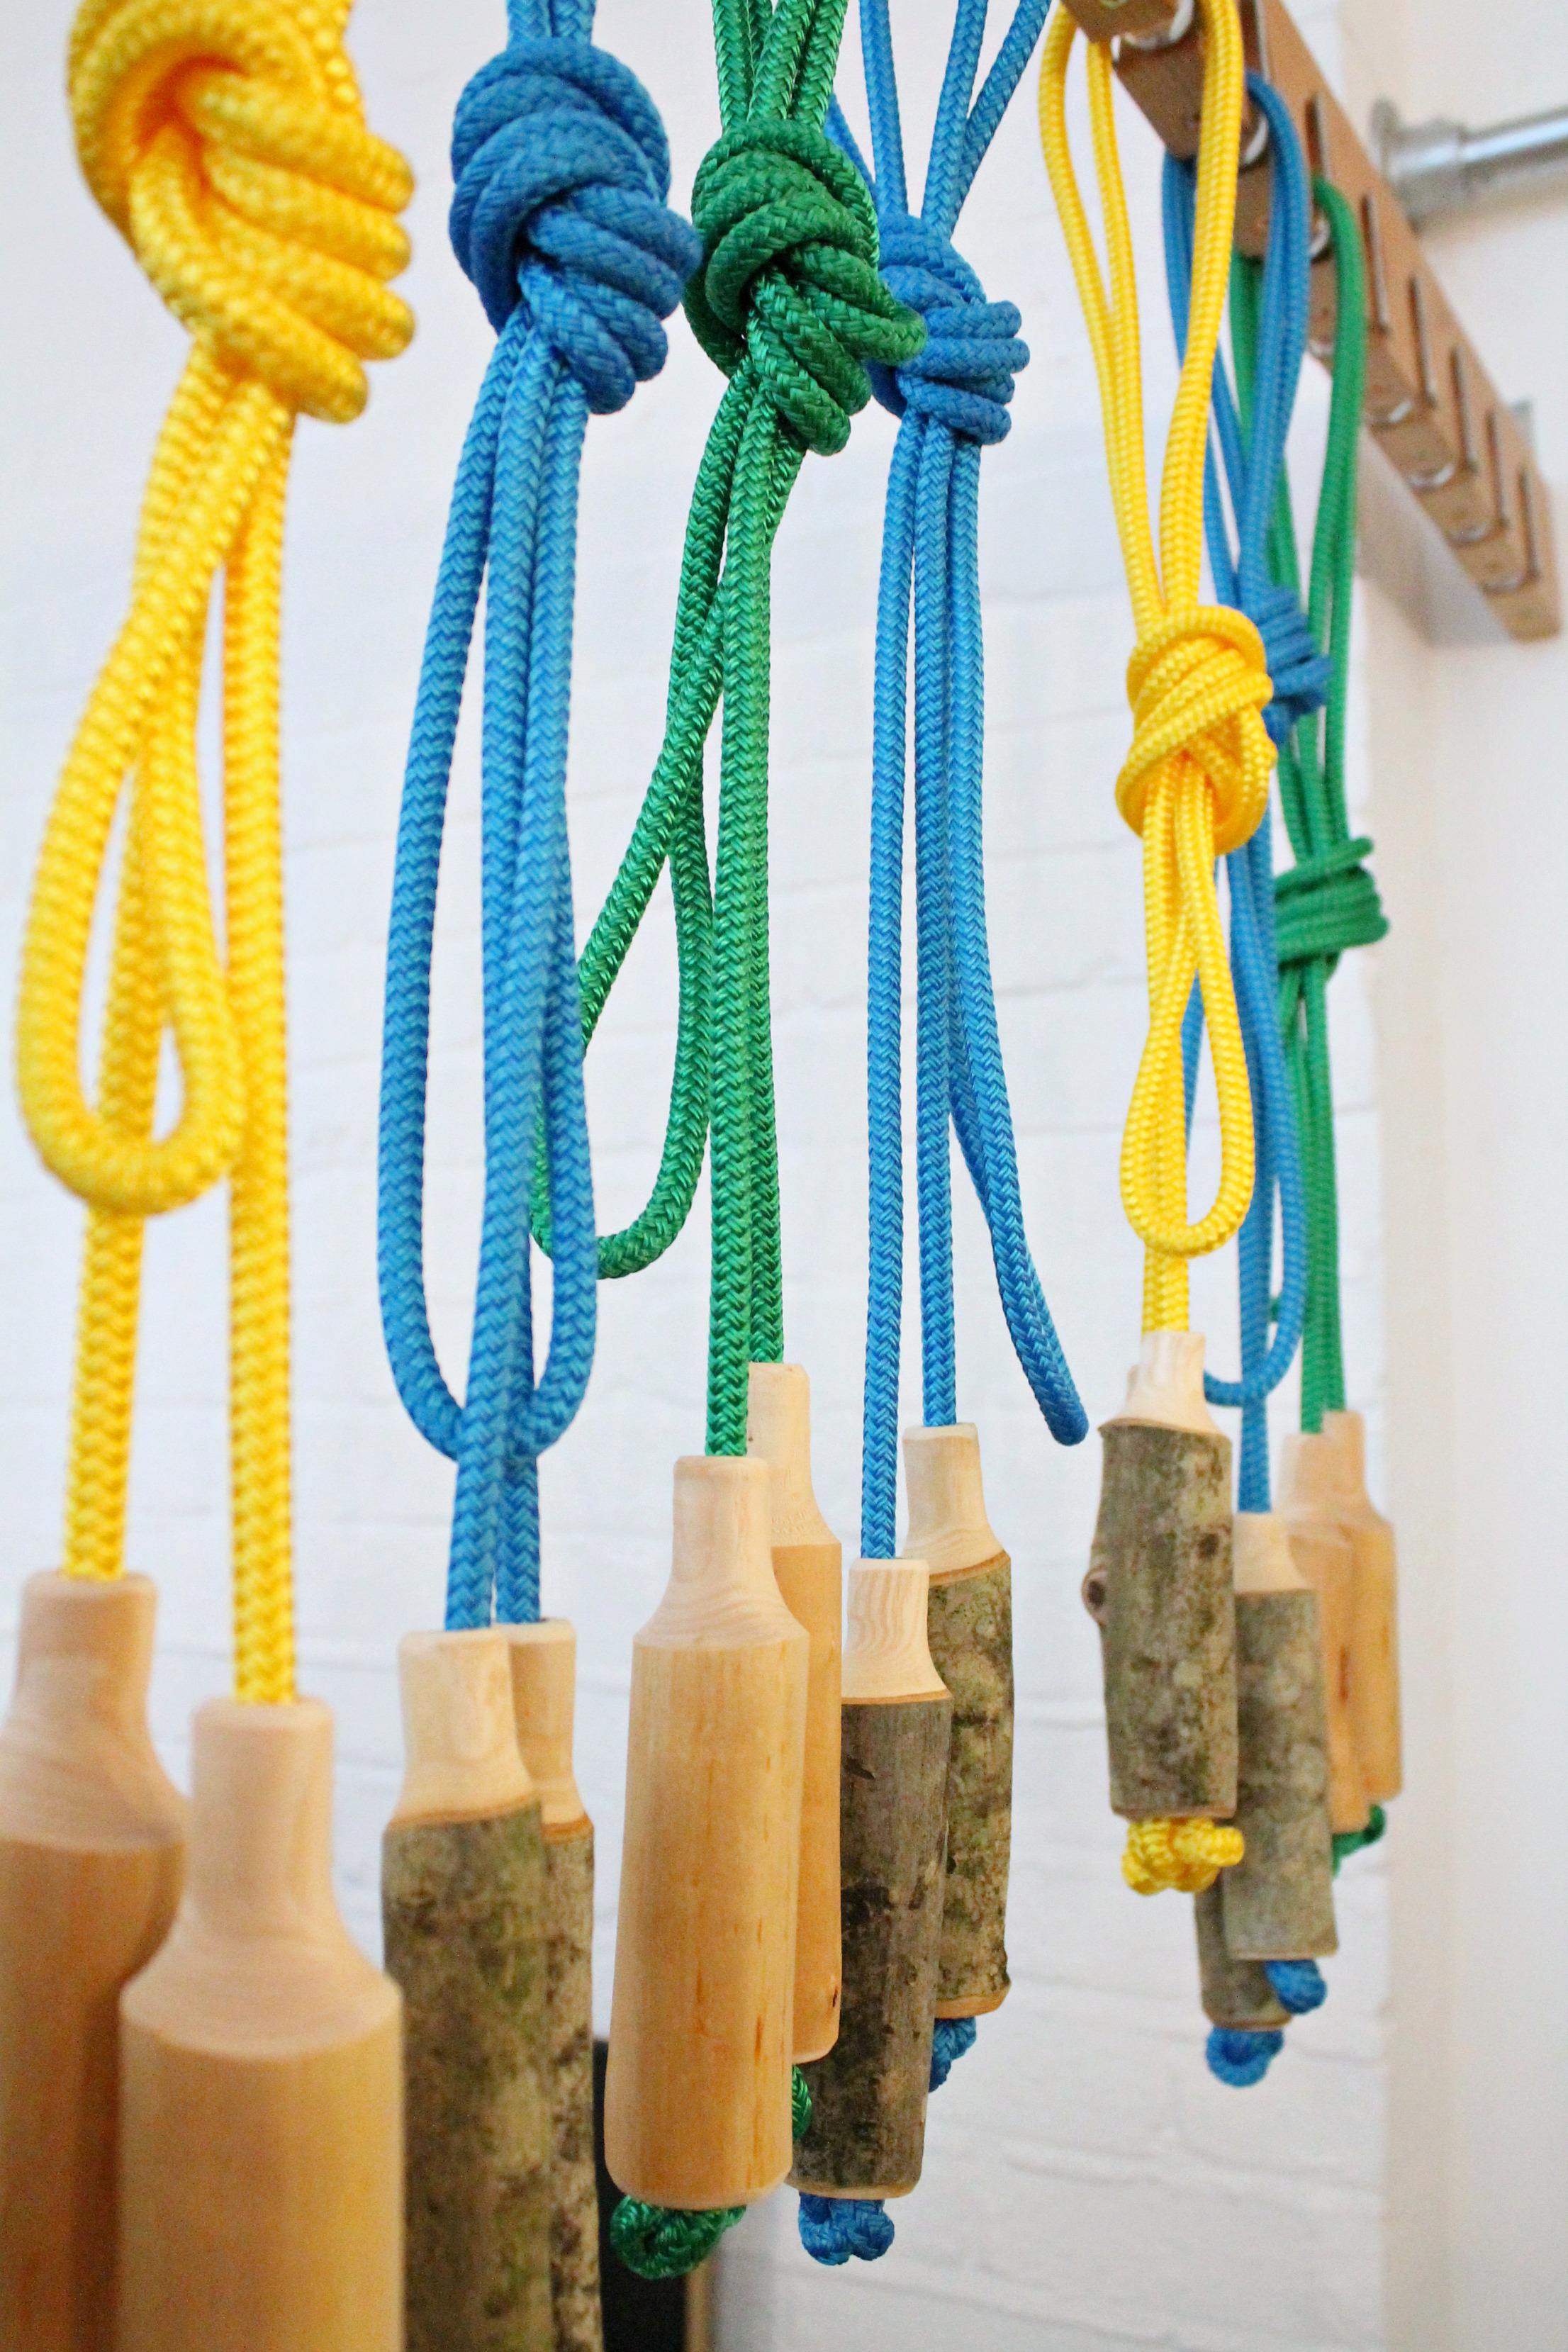 Geoffrey-Fisher-Design-skipping-ropes-Remodelista-markey-photo-by-Geraldine-Tan-of-Little-Big-Bell